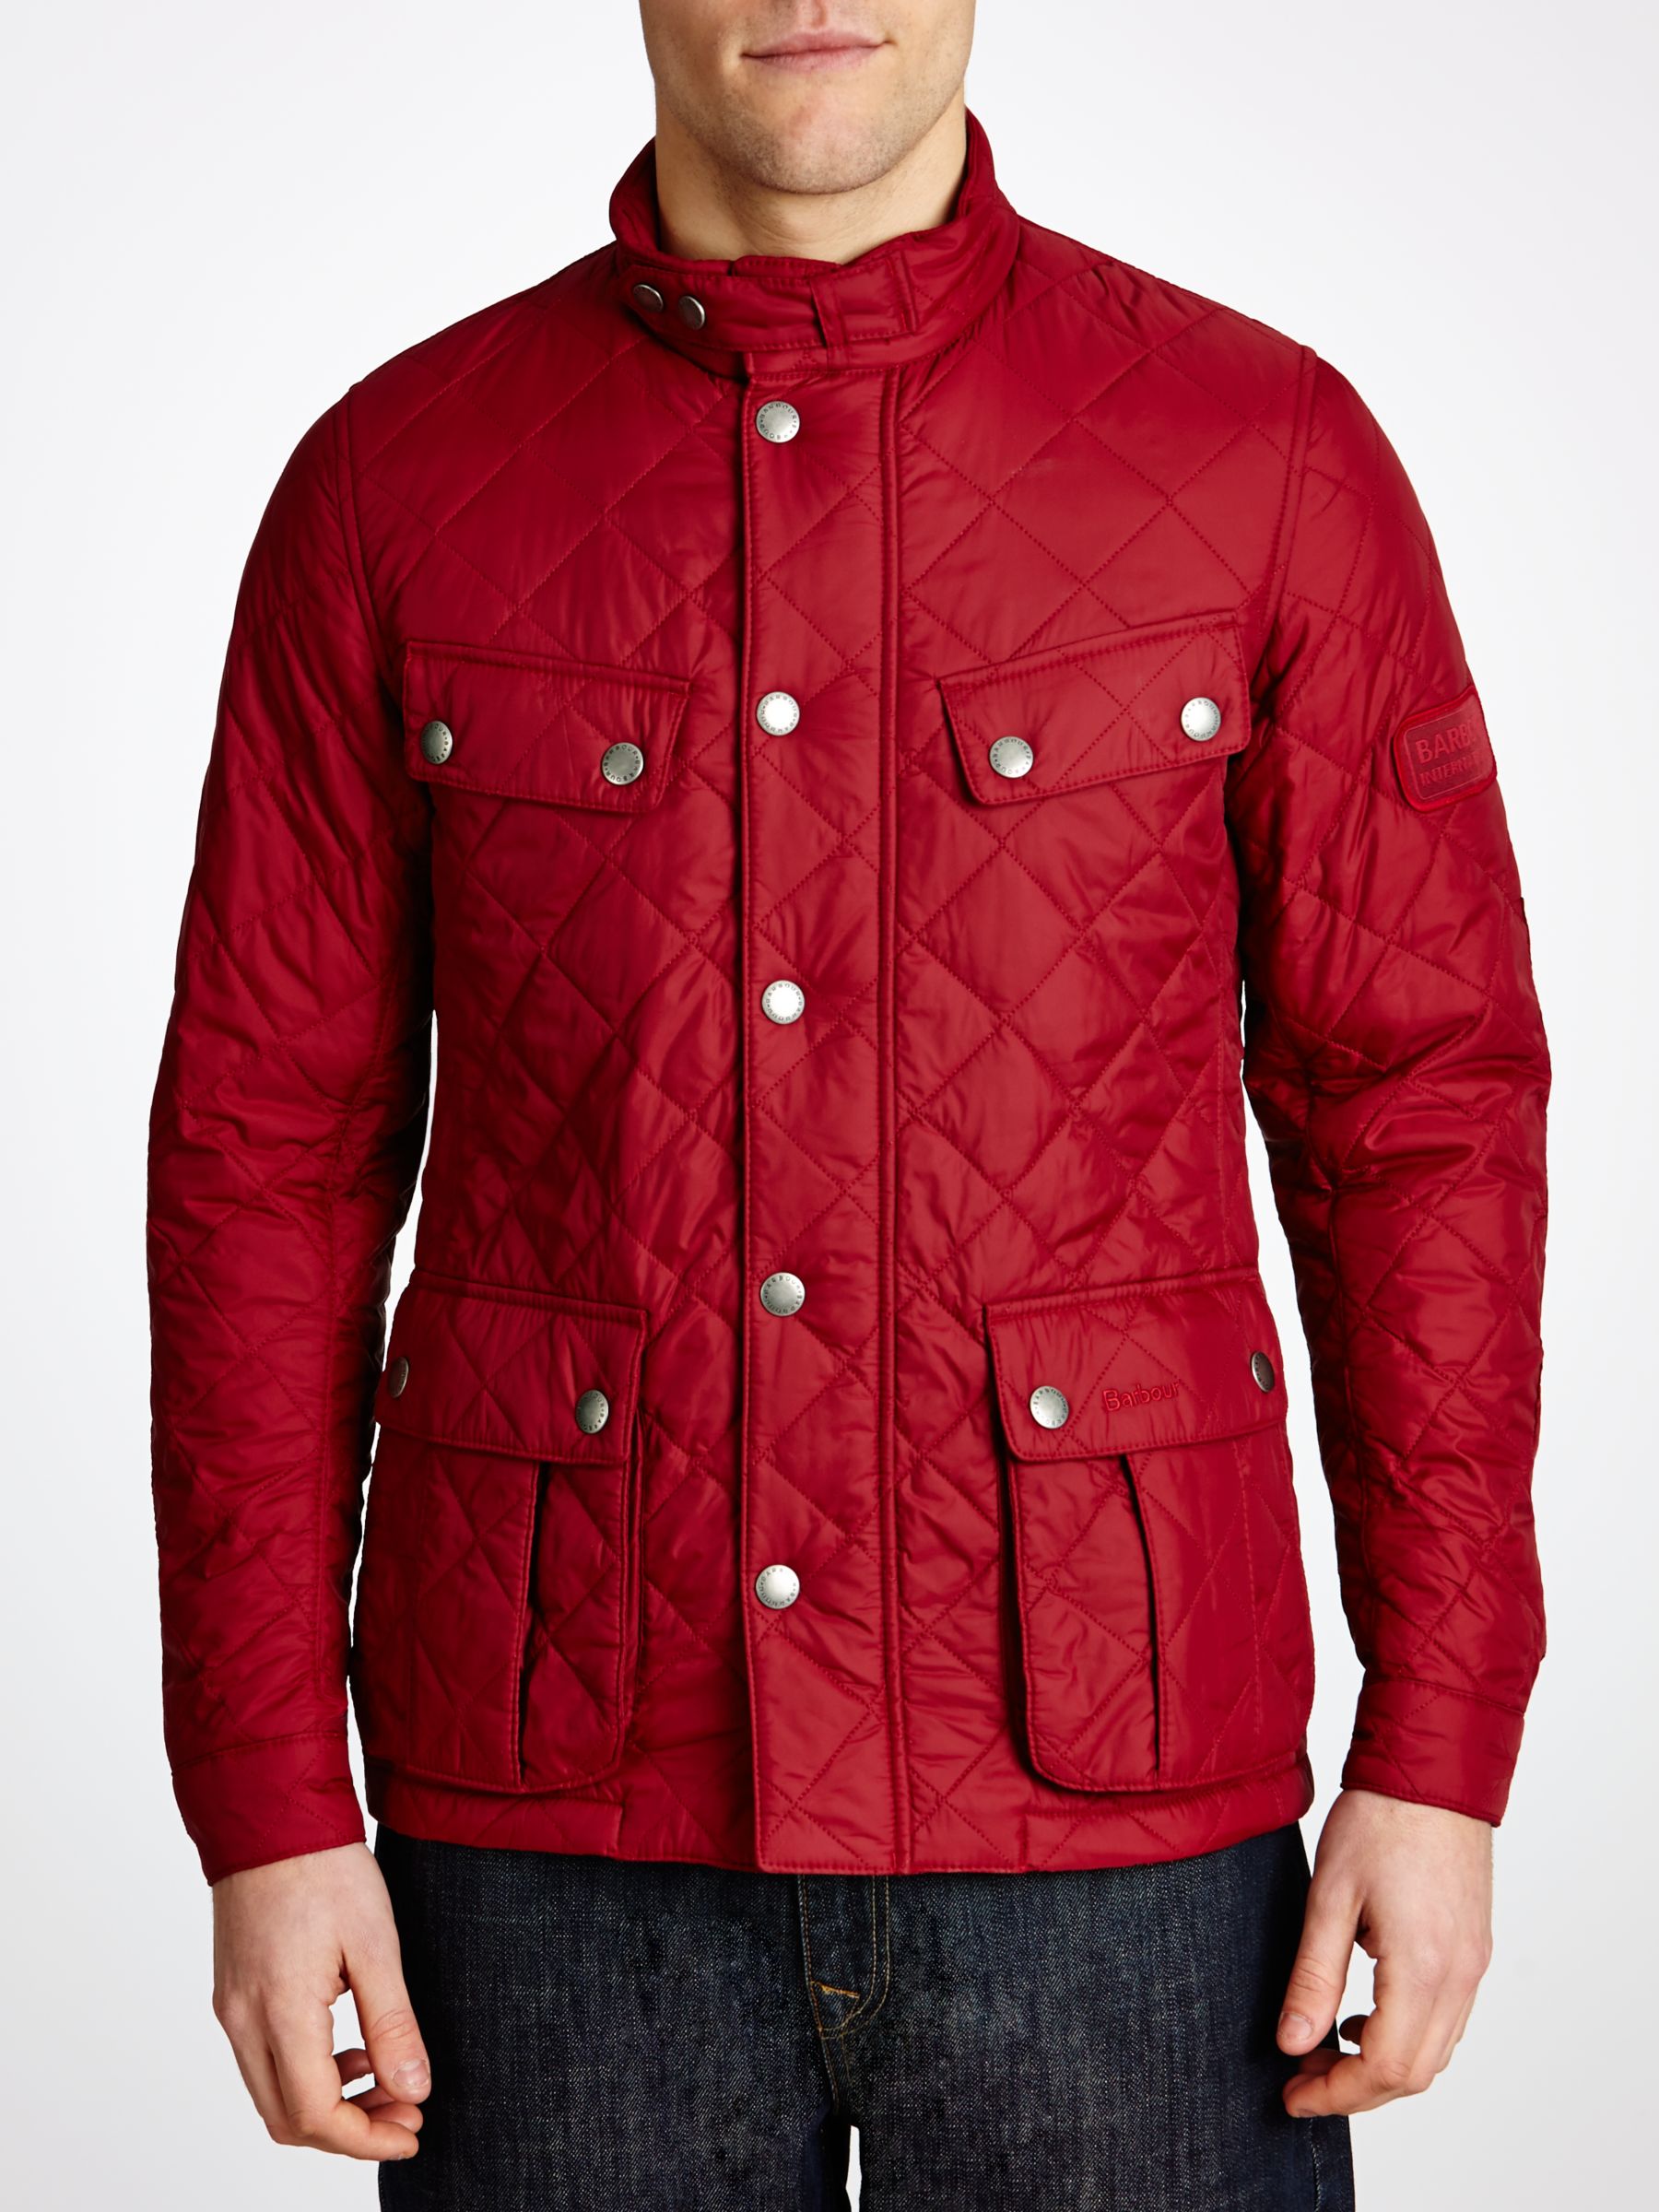 barbour international red jacket